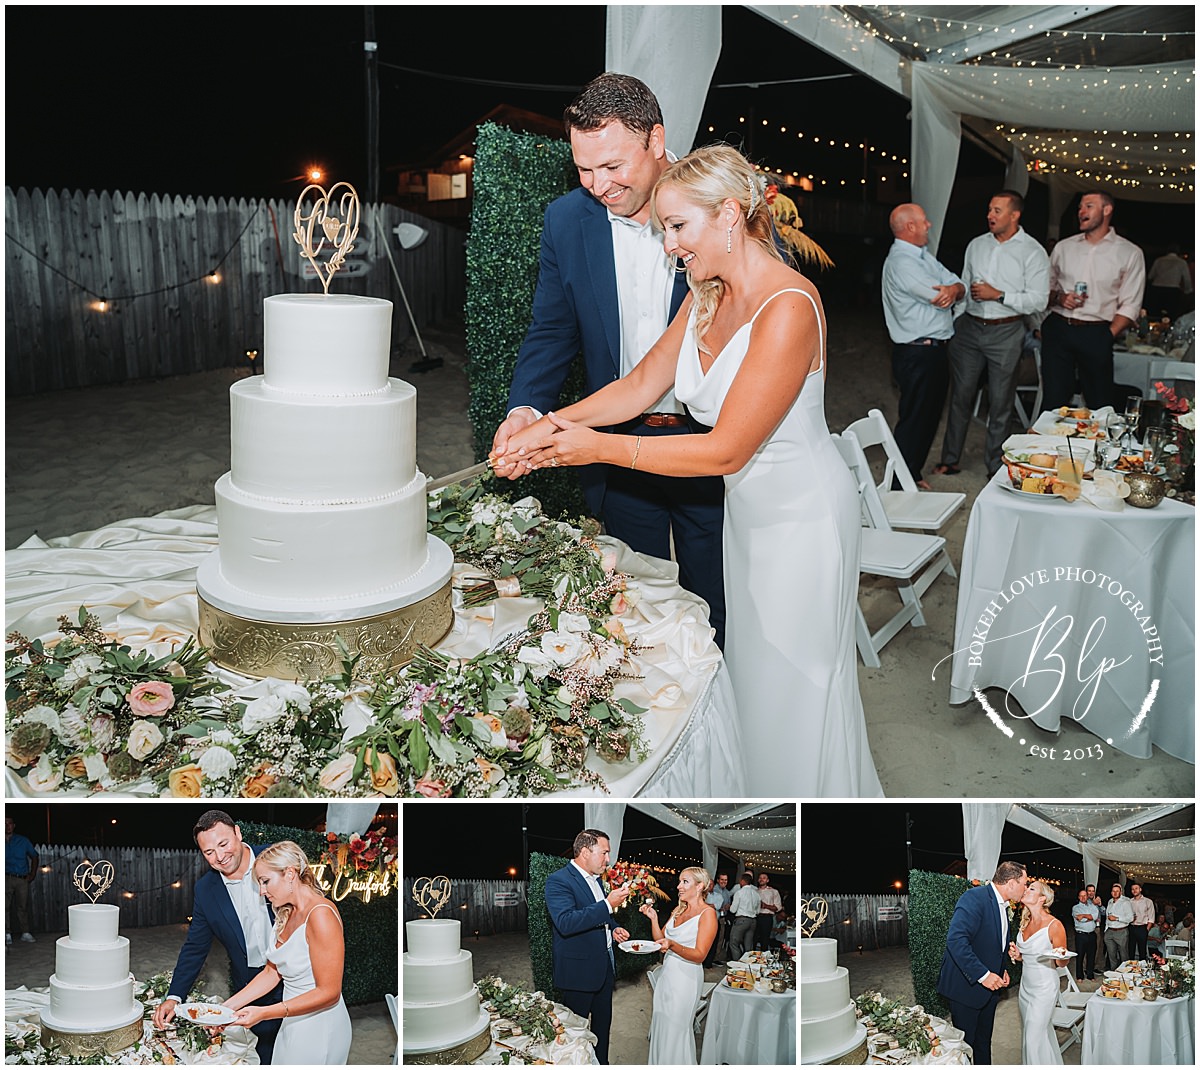 Bokeh Love Photography, Deauville Inn Wedding, Bride and Groom cut wedding cake